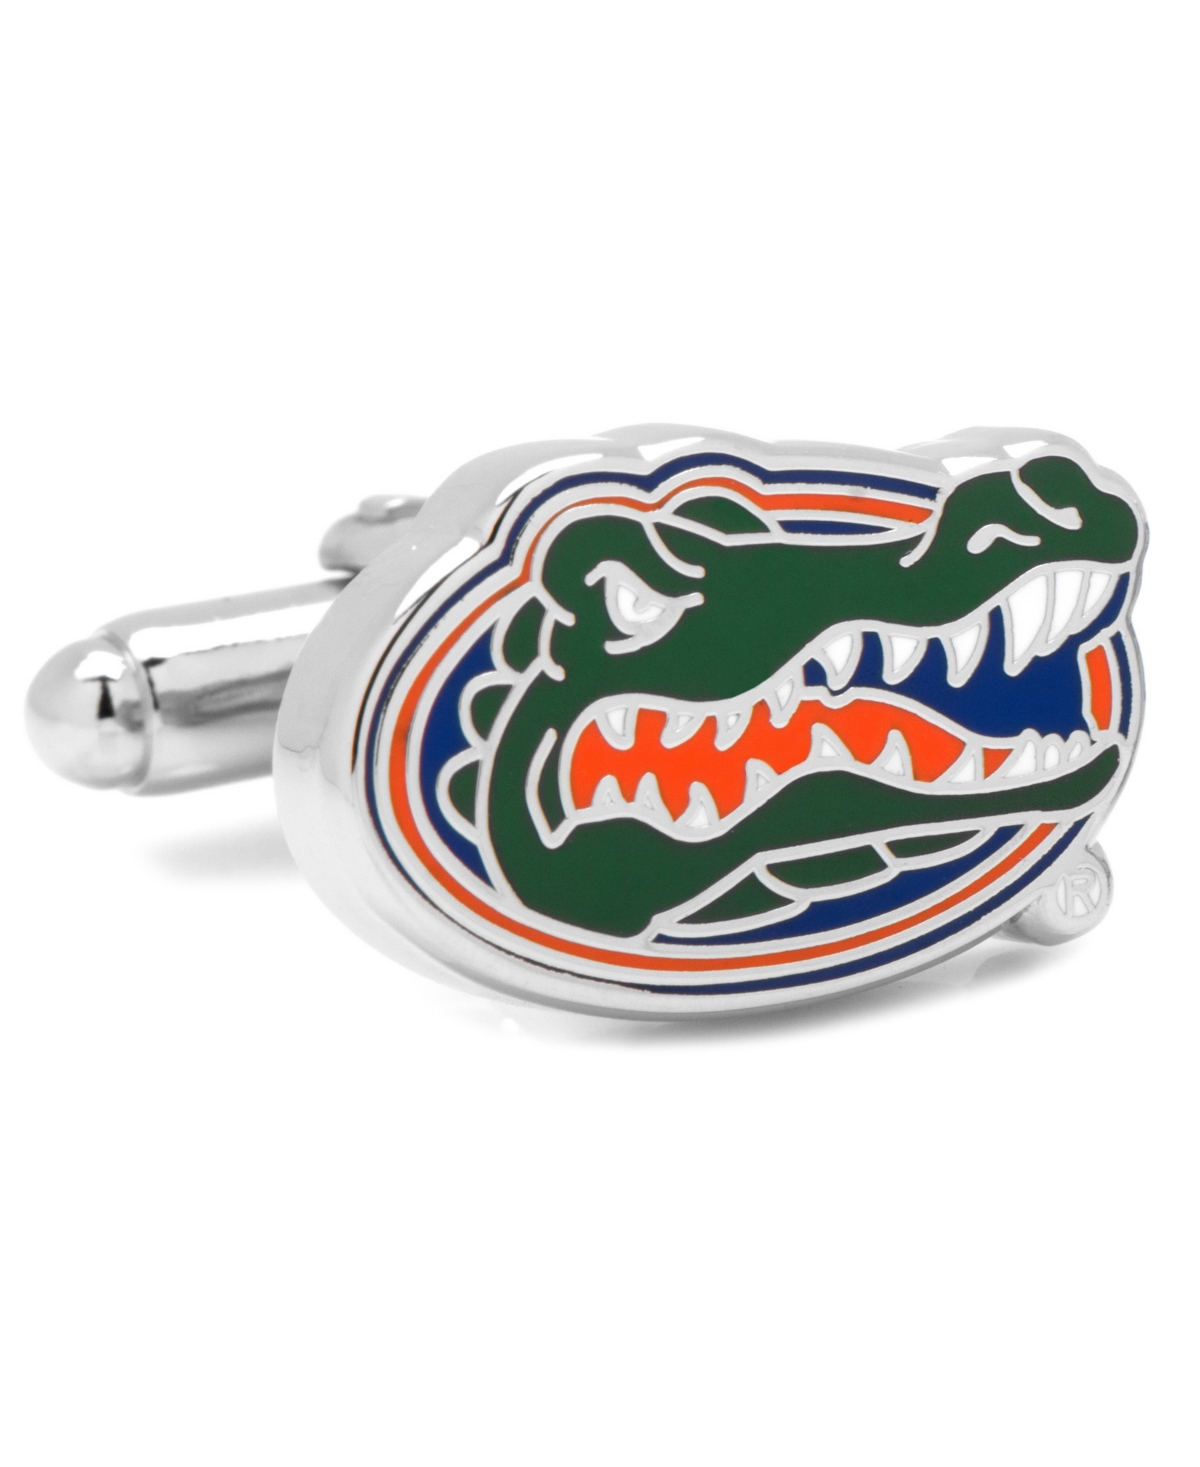 University of Florida Gators Cufflinks - Green